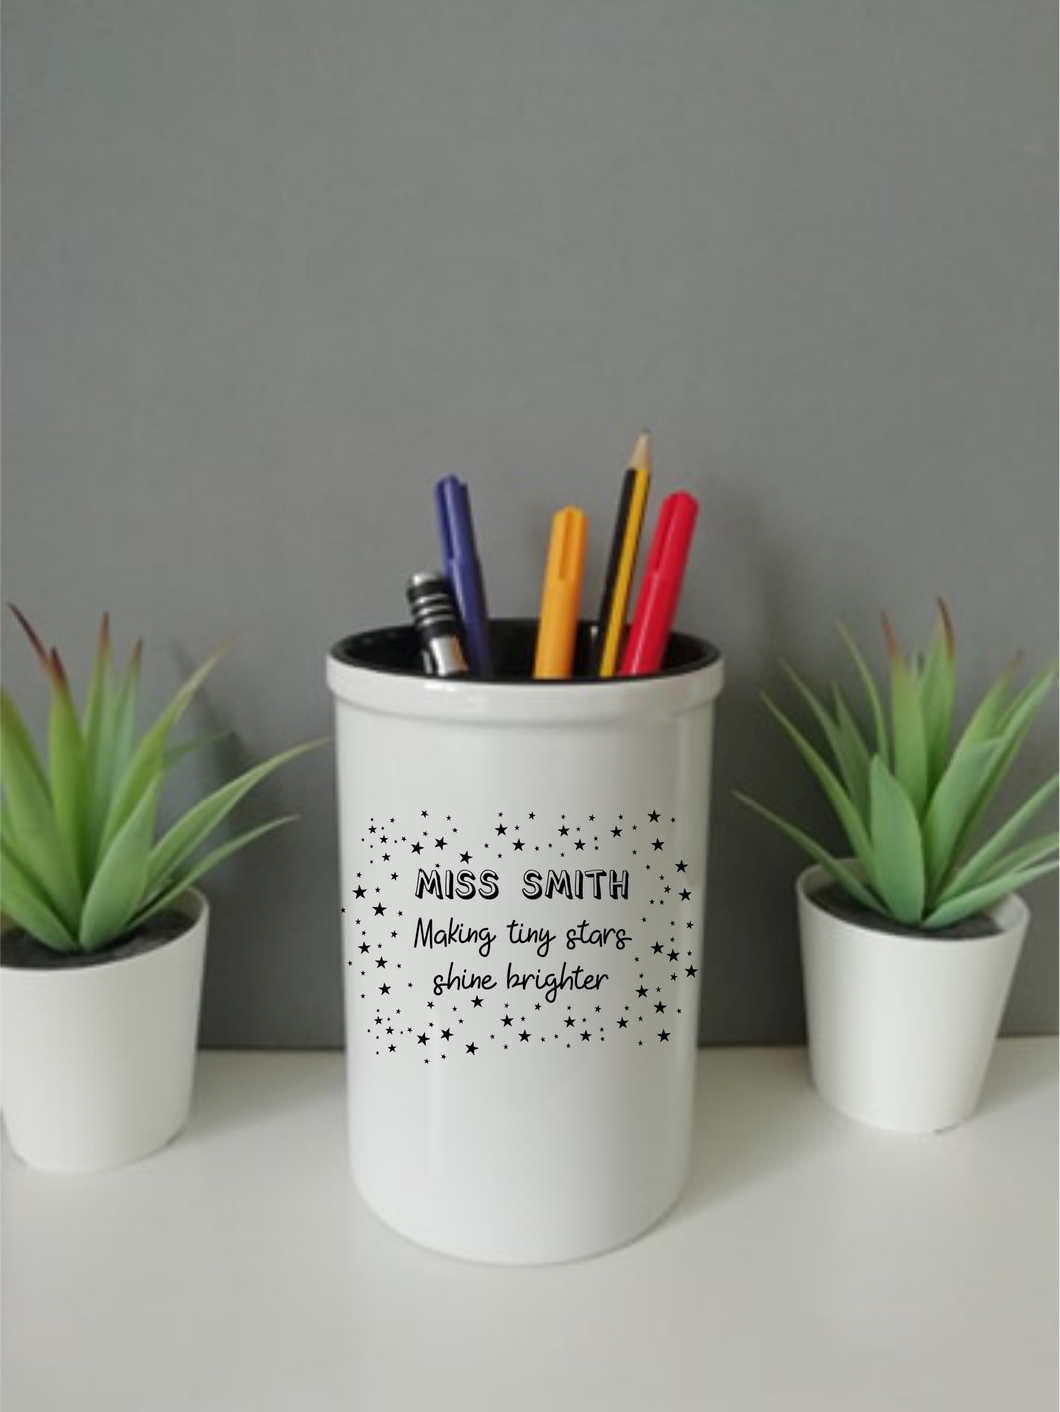 Tiny stars- Personalised Teacher Pen Pot- desk tidy - Thank you teacher gift